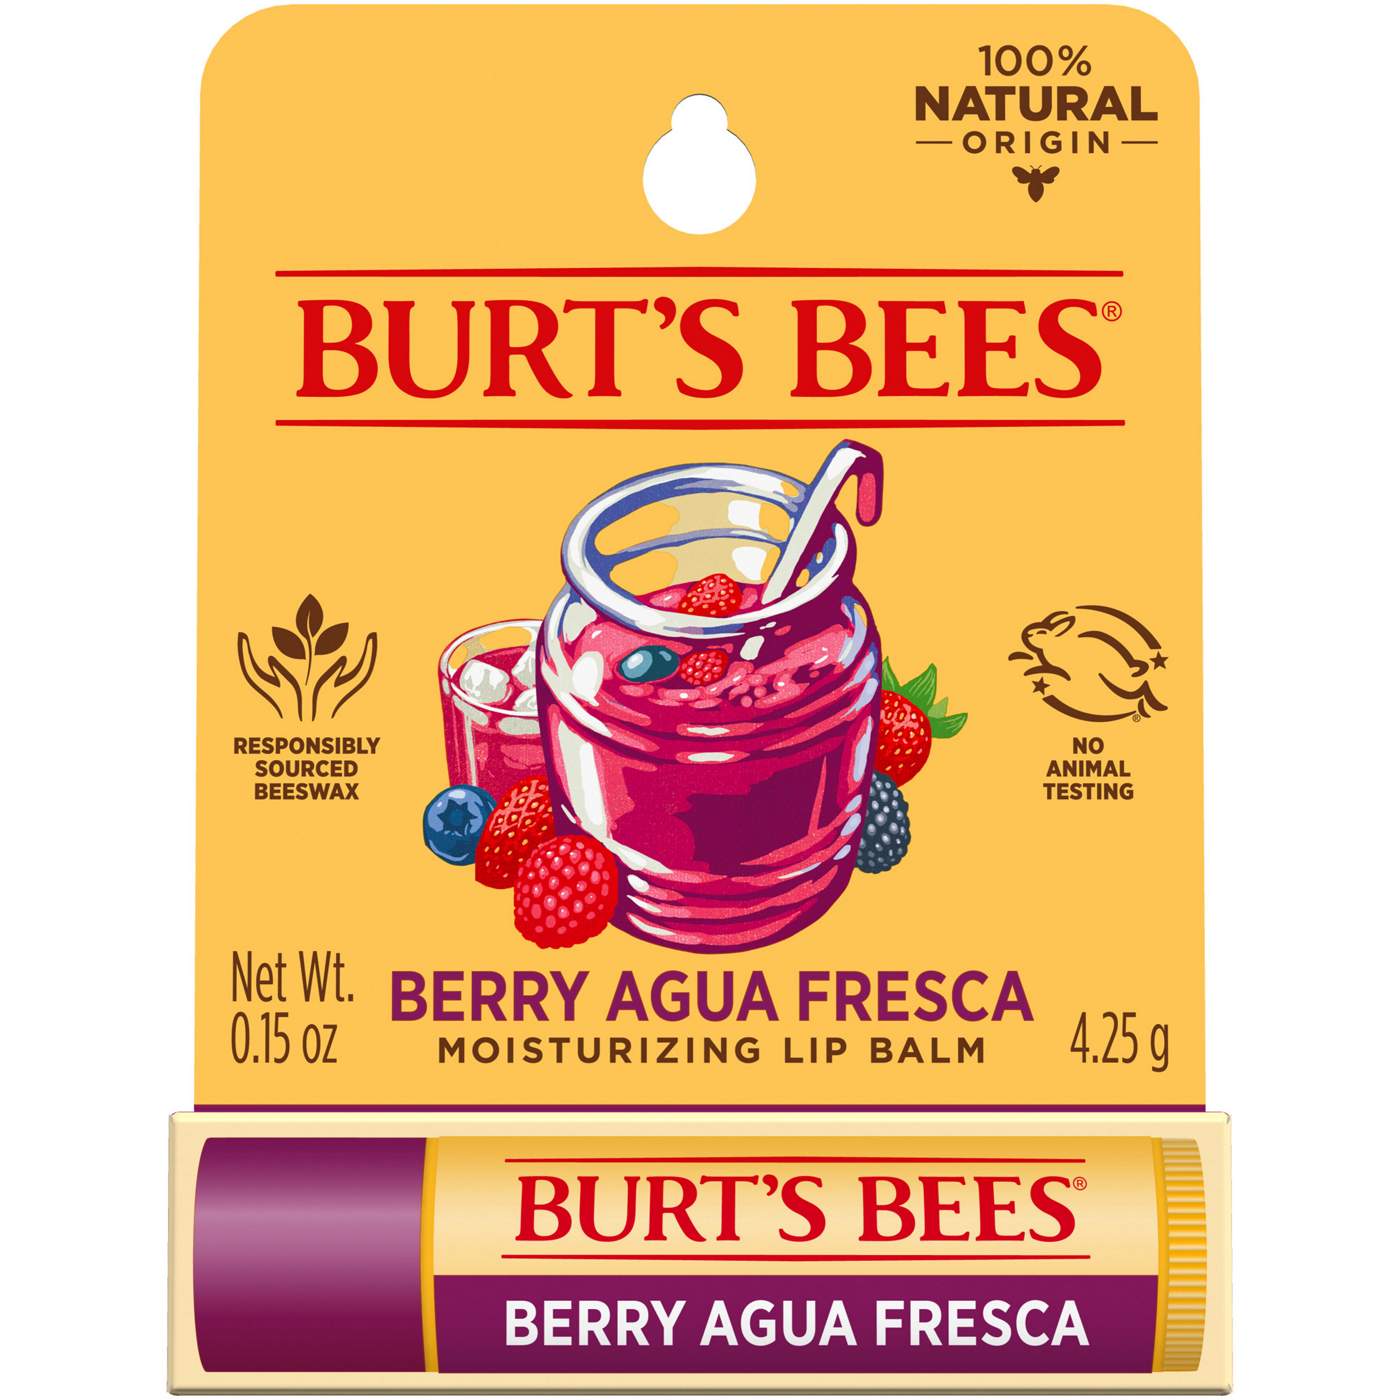 Burt's Bees 100% Natural Origin Moisturizing Lip Balm - Berry Agua Fresca with Beeswax; image 1 of 5